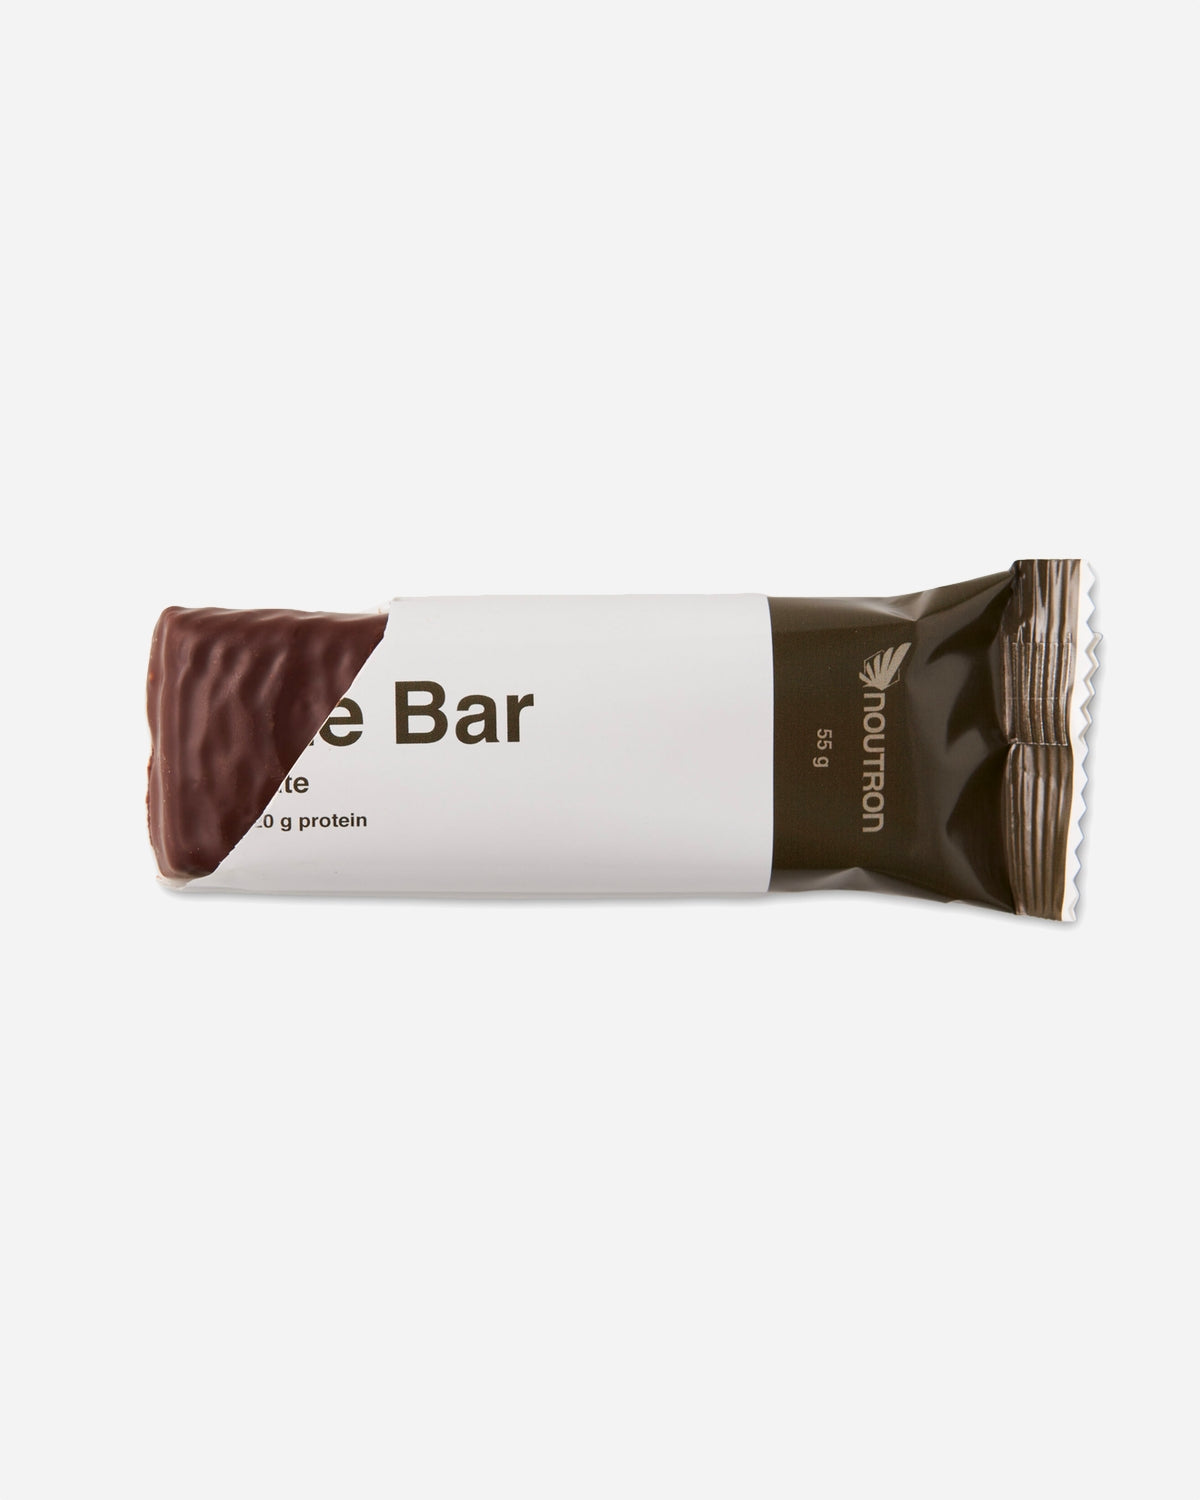 Athlete Bar - Crispy chocolate